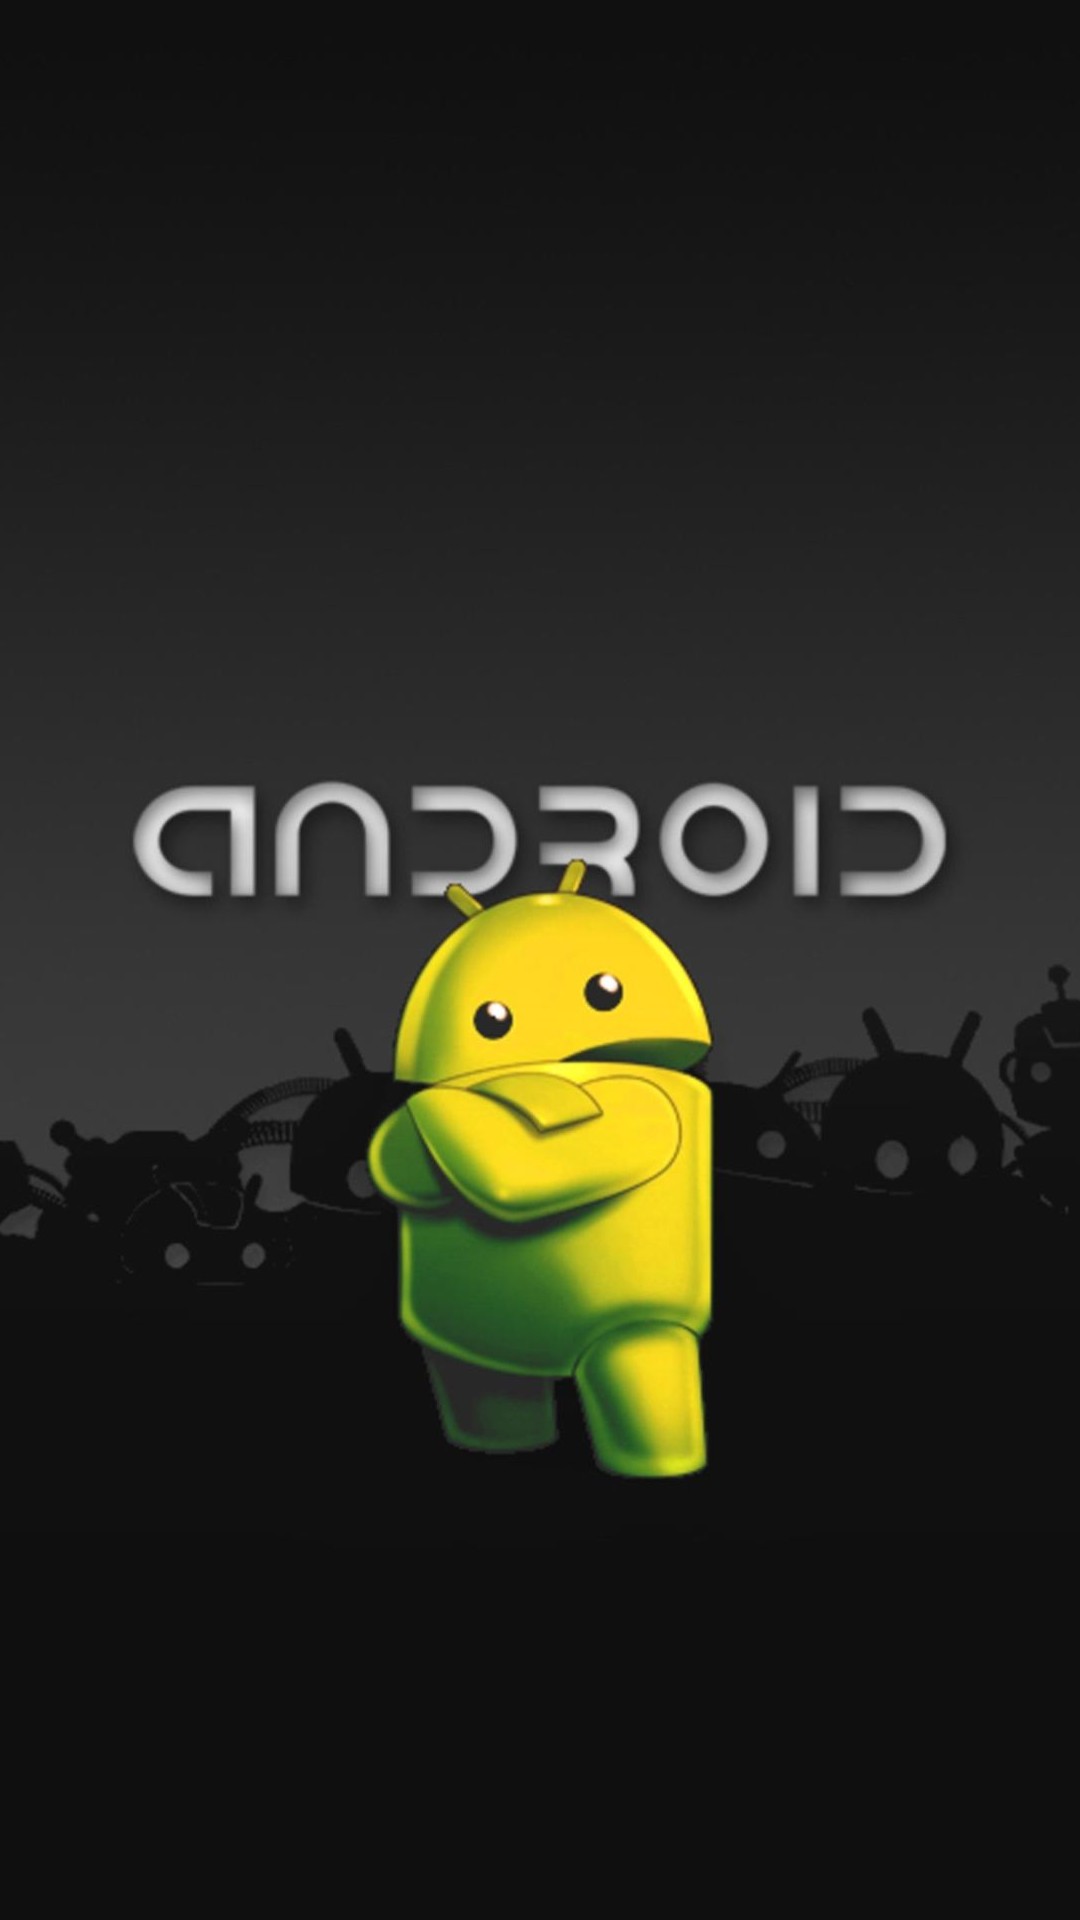 Android Lg G2 Wallpaper HD